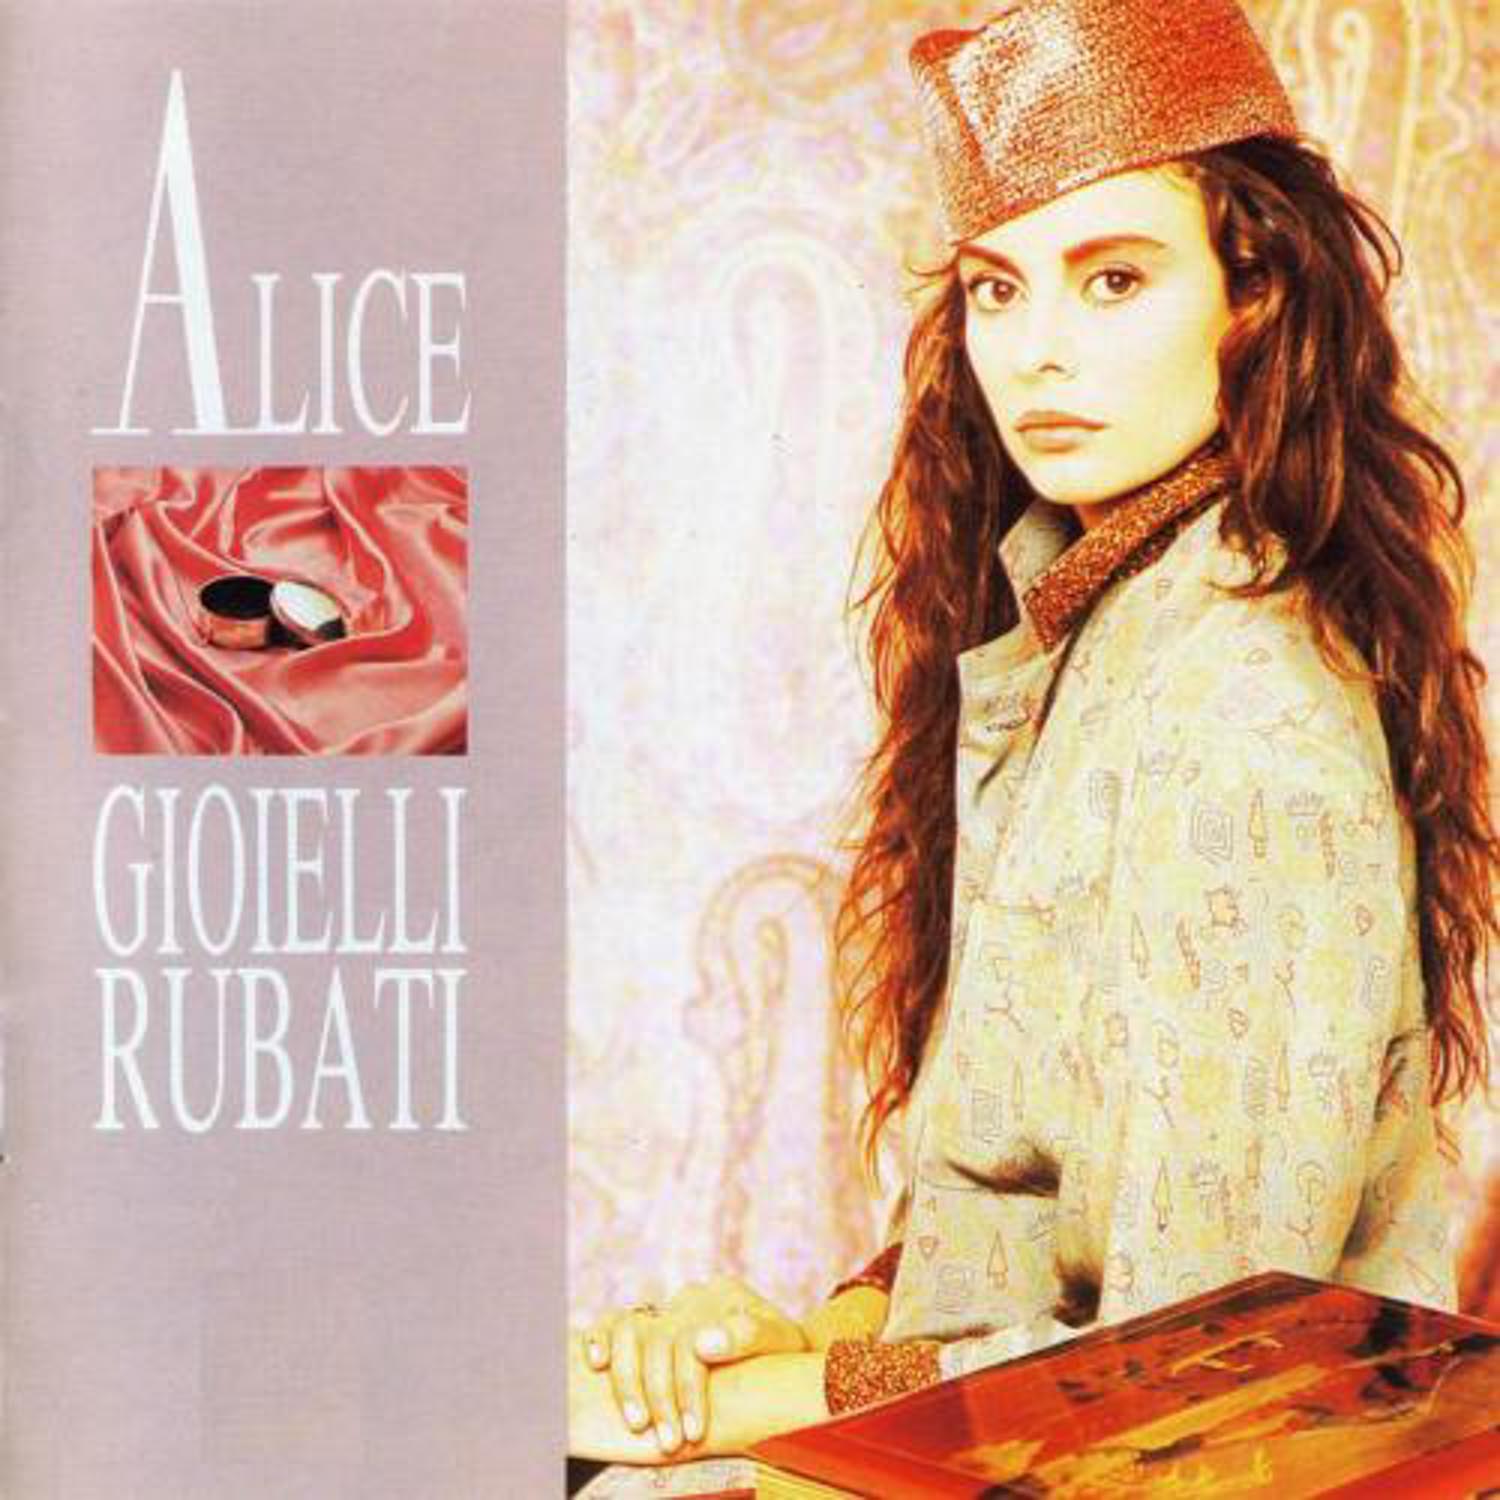 Alice  Gioelli Rubati  *LP 12'' (Vinyl)*. 